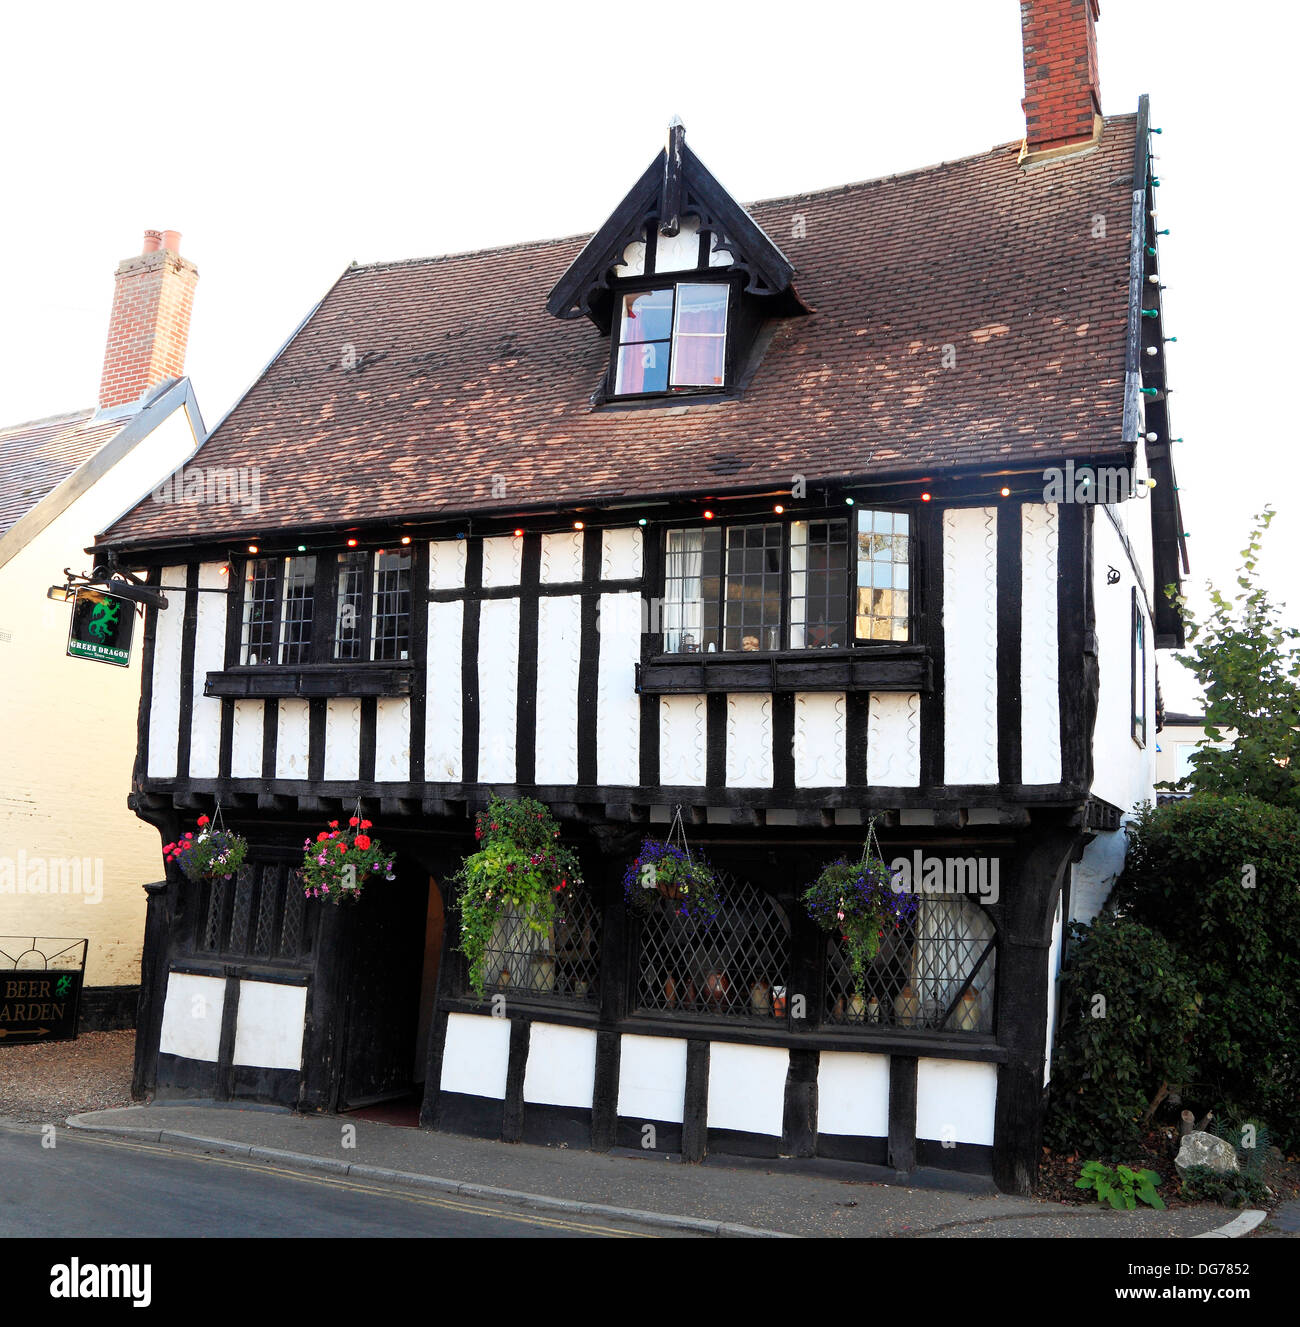 Wymondham, Norfolk, The Green Dragon tavern, inn, pub, mid 15th century timbered building, England UK English pubs taverns inns Stock Photo